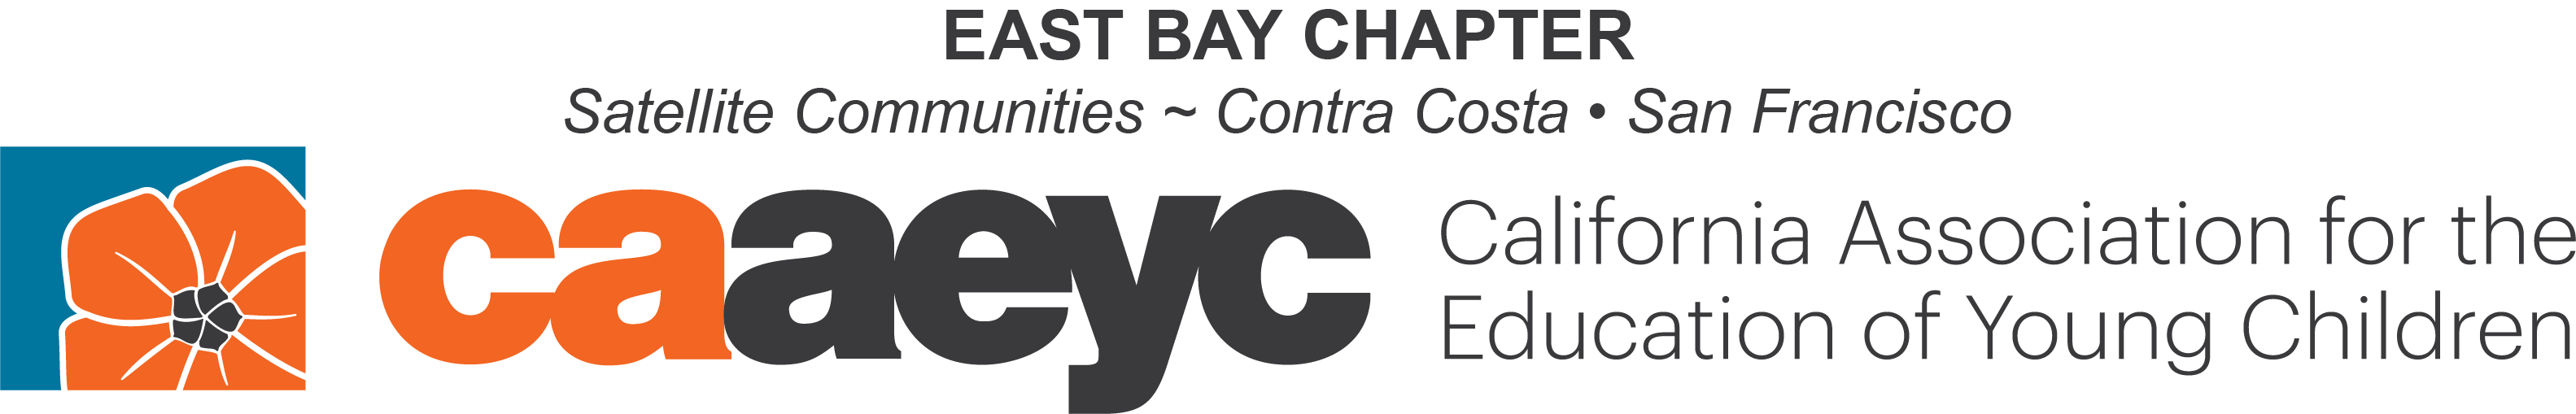 CAAEYC East Bay Chapter